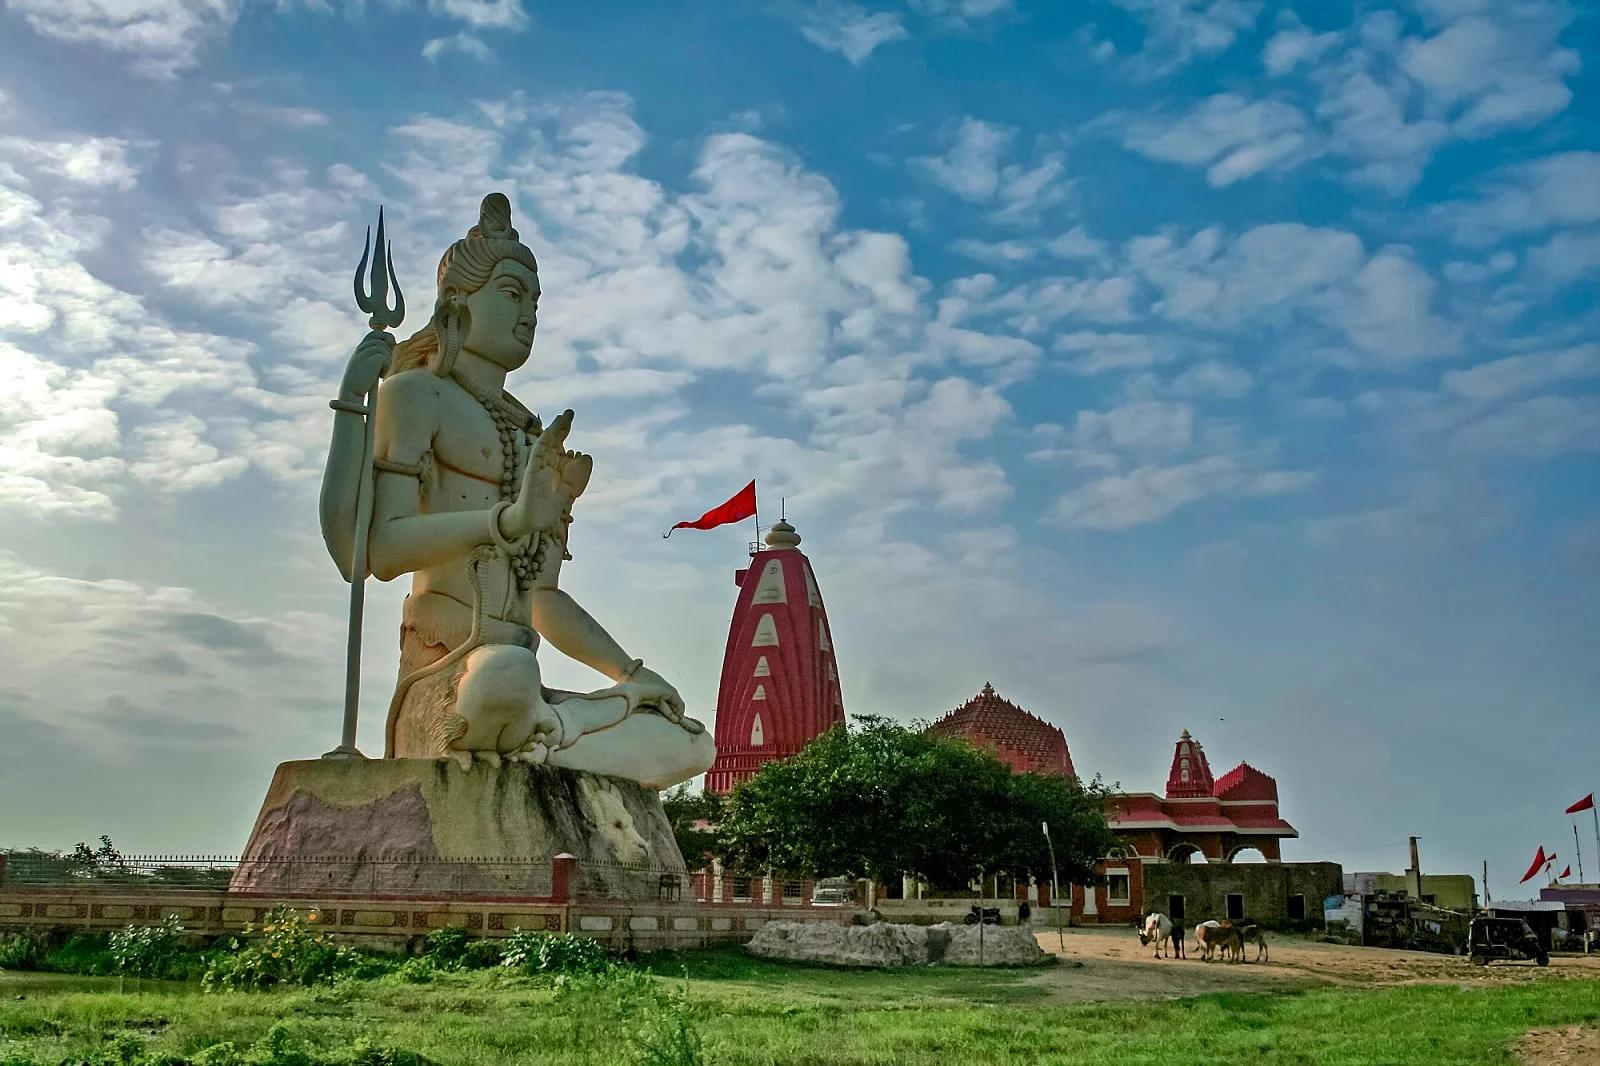 Nageshwar-jyotirlinga-temple-